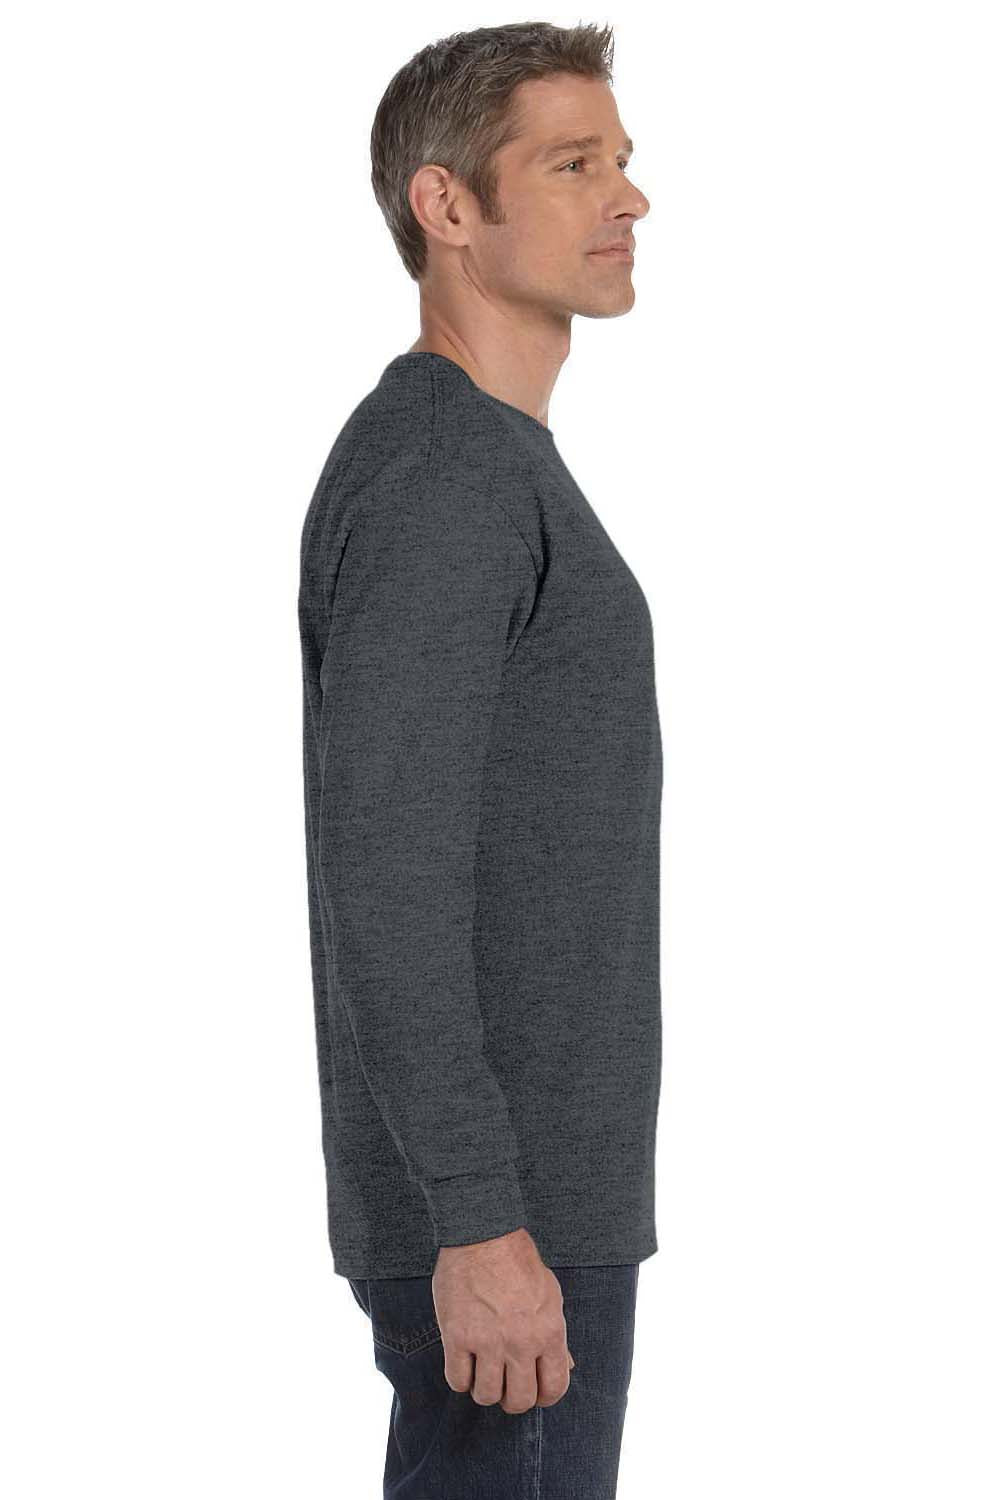 Hanes 5586 Mens ComfortSoft Long Sleeve Crewneck T-Shirt Heather Charcoal Grey Side